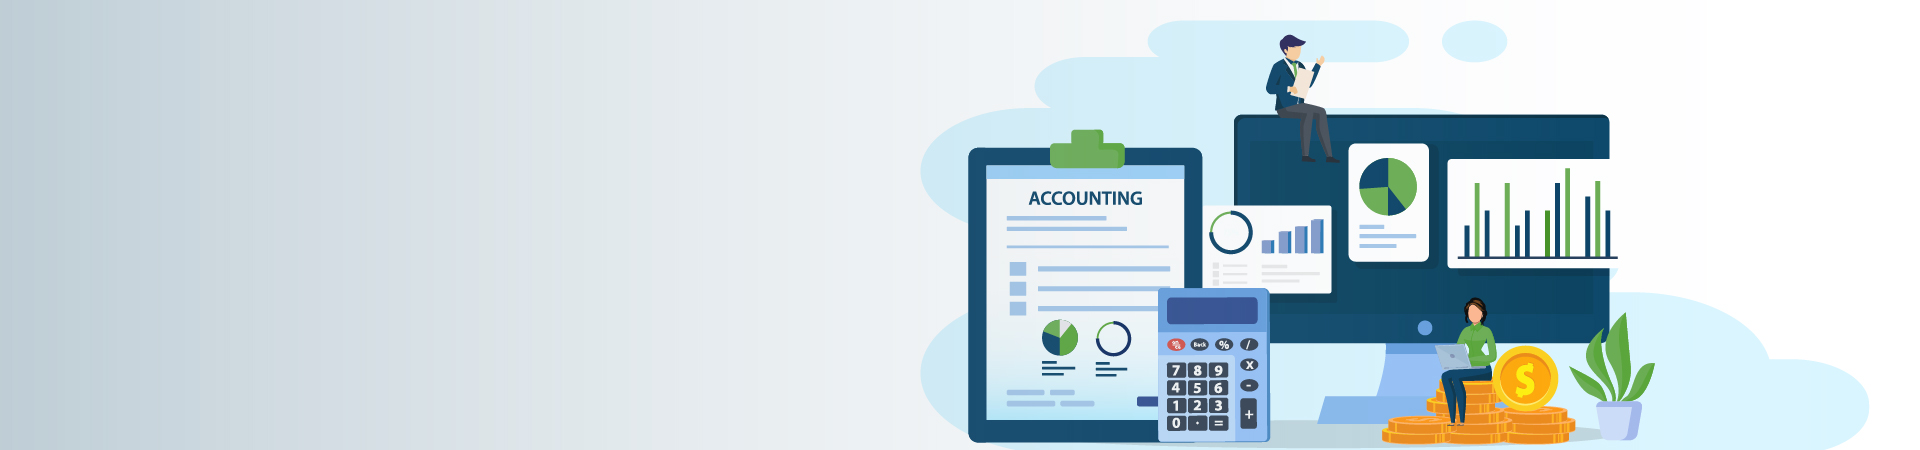 account outsourcing & bookkeeping banner jain anurag & associates